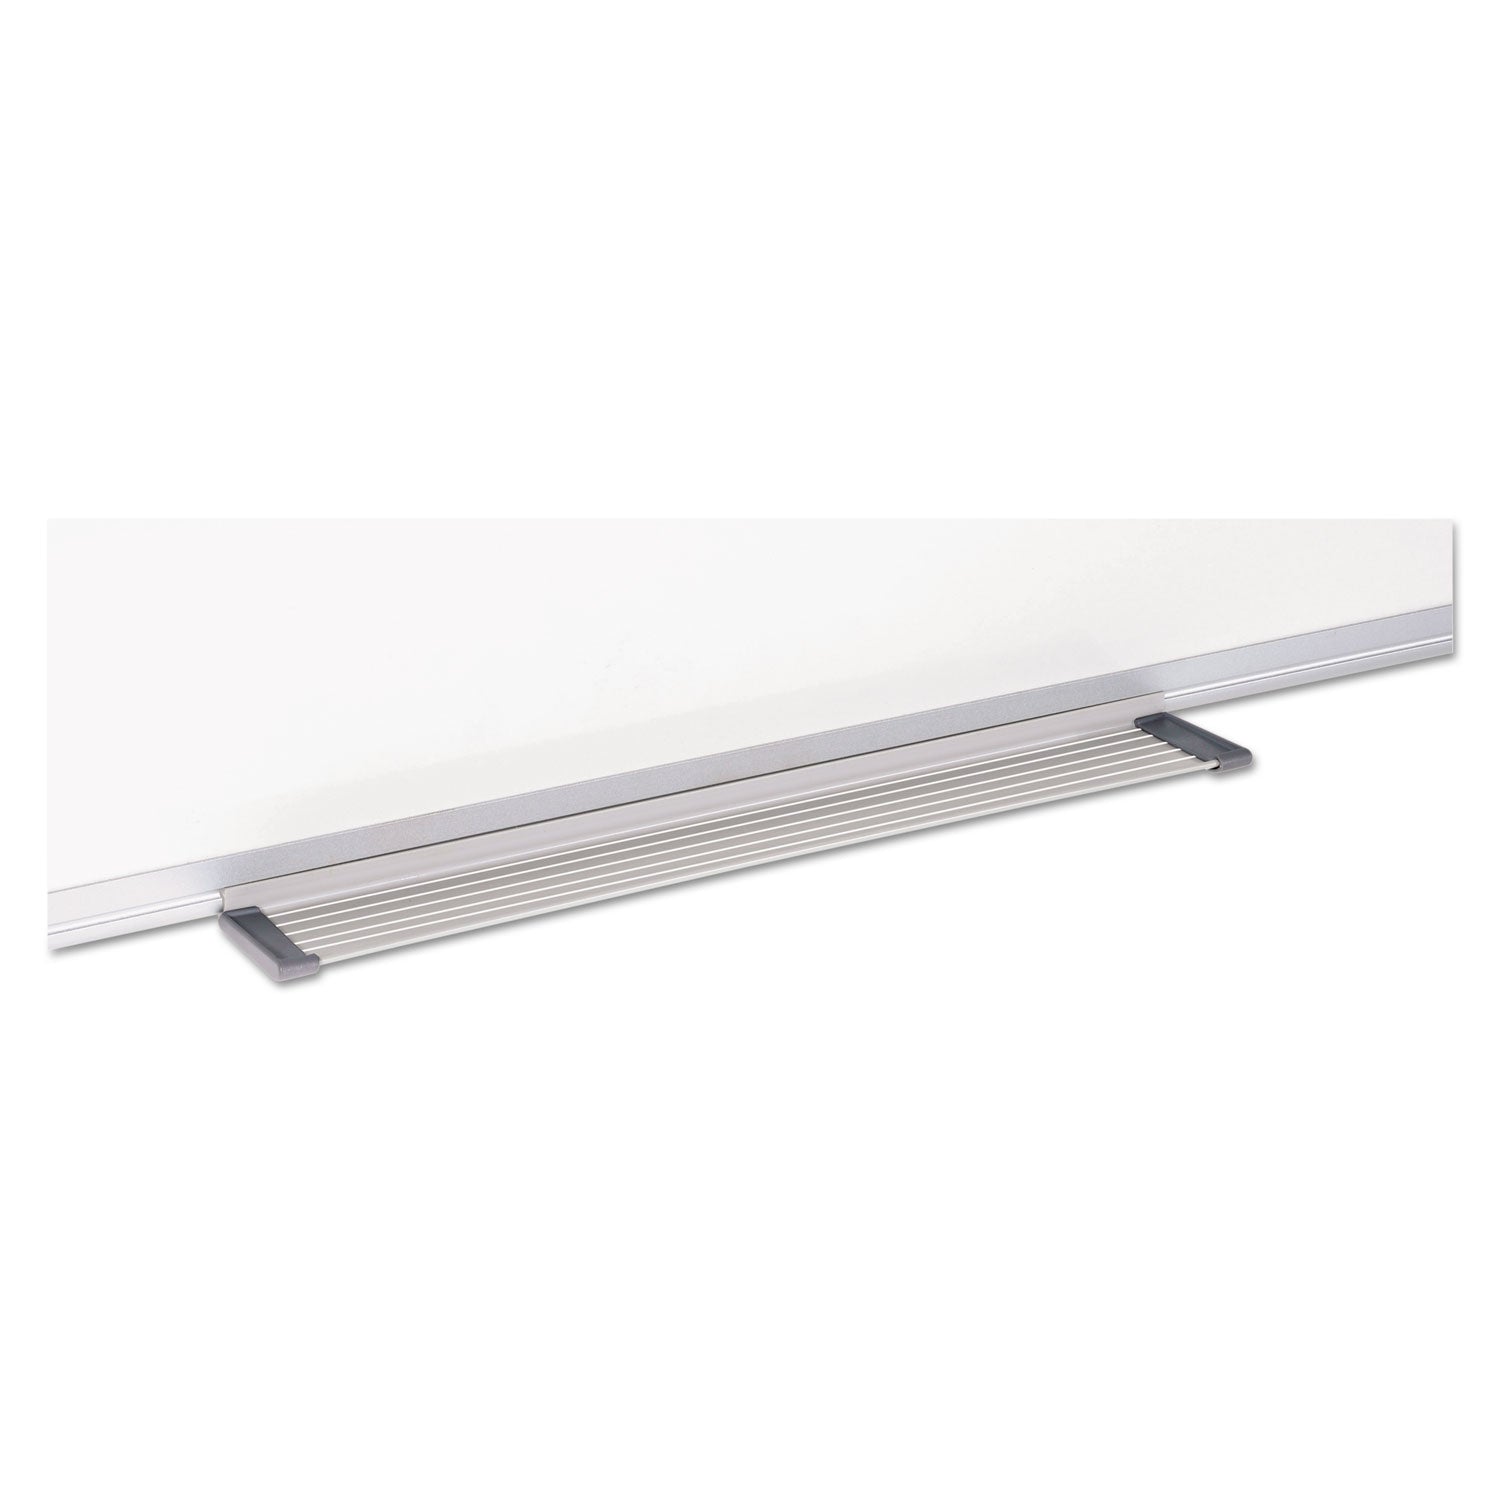 Porcelain Value Dry Erase Board, 24 x 36, White Surface, Silver Aluminum Frame - 